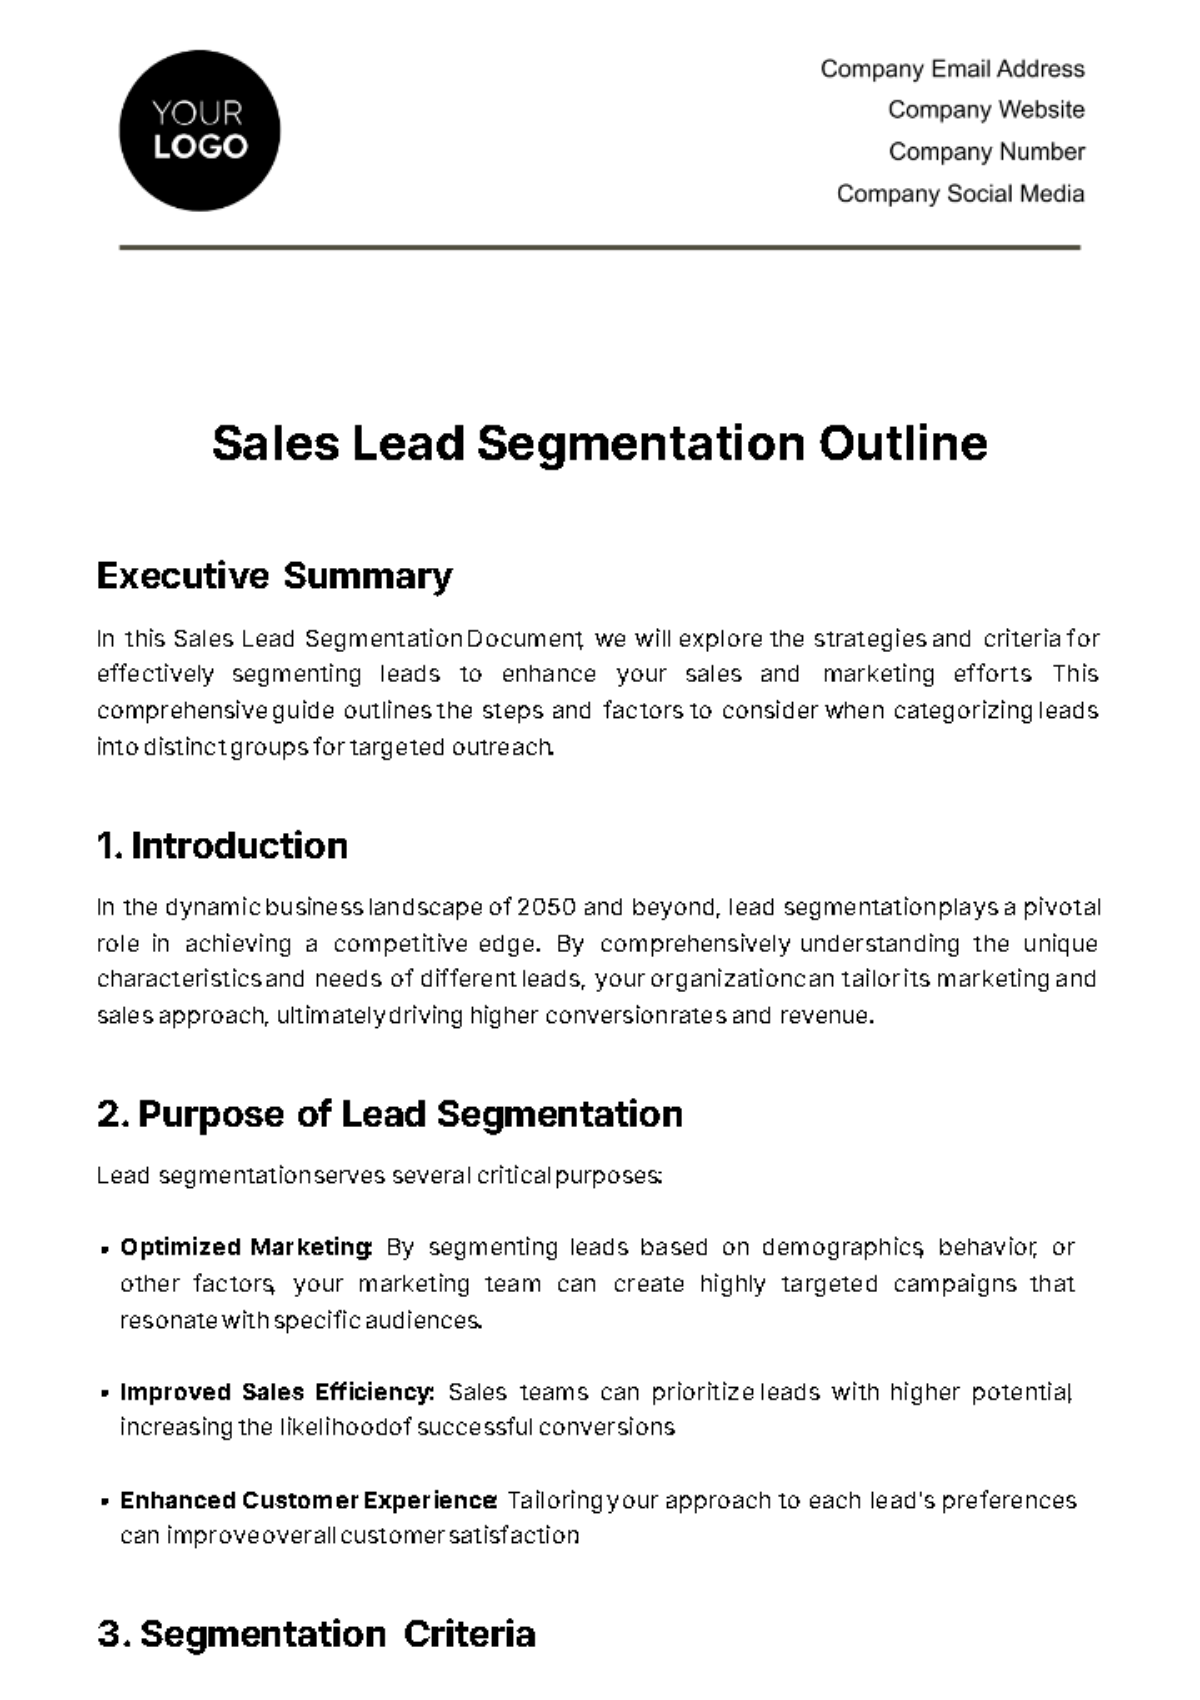 Sales Lead Segmentation Outline Template